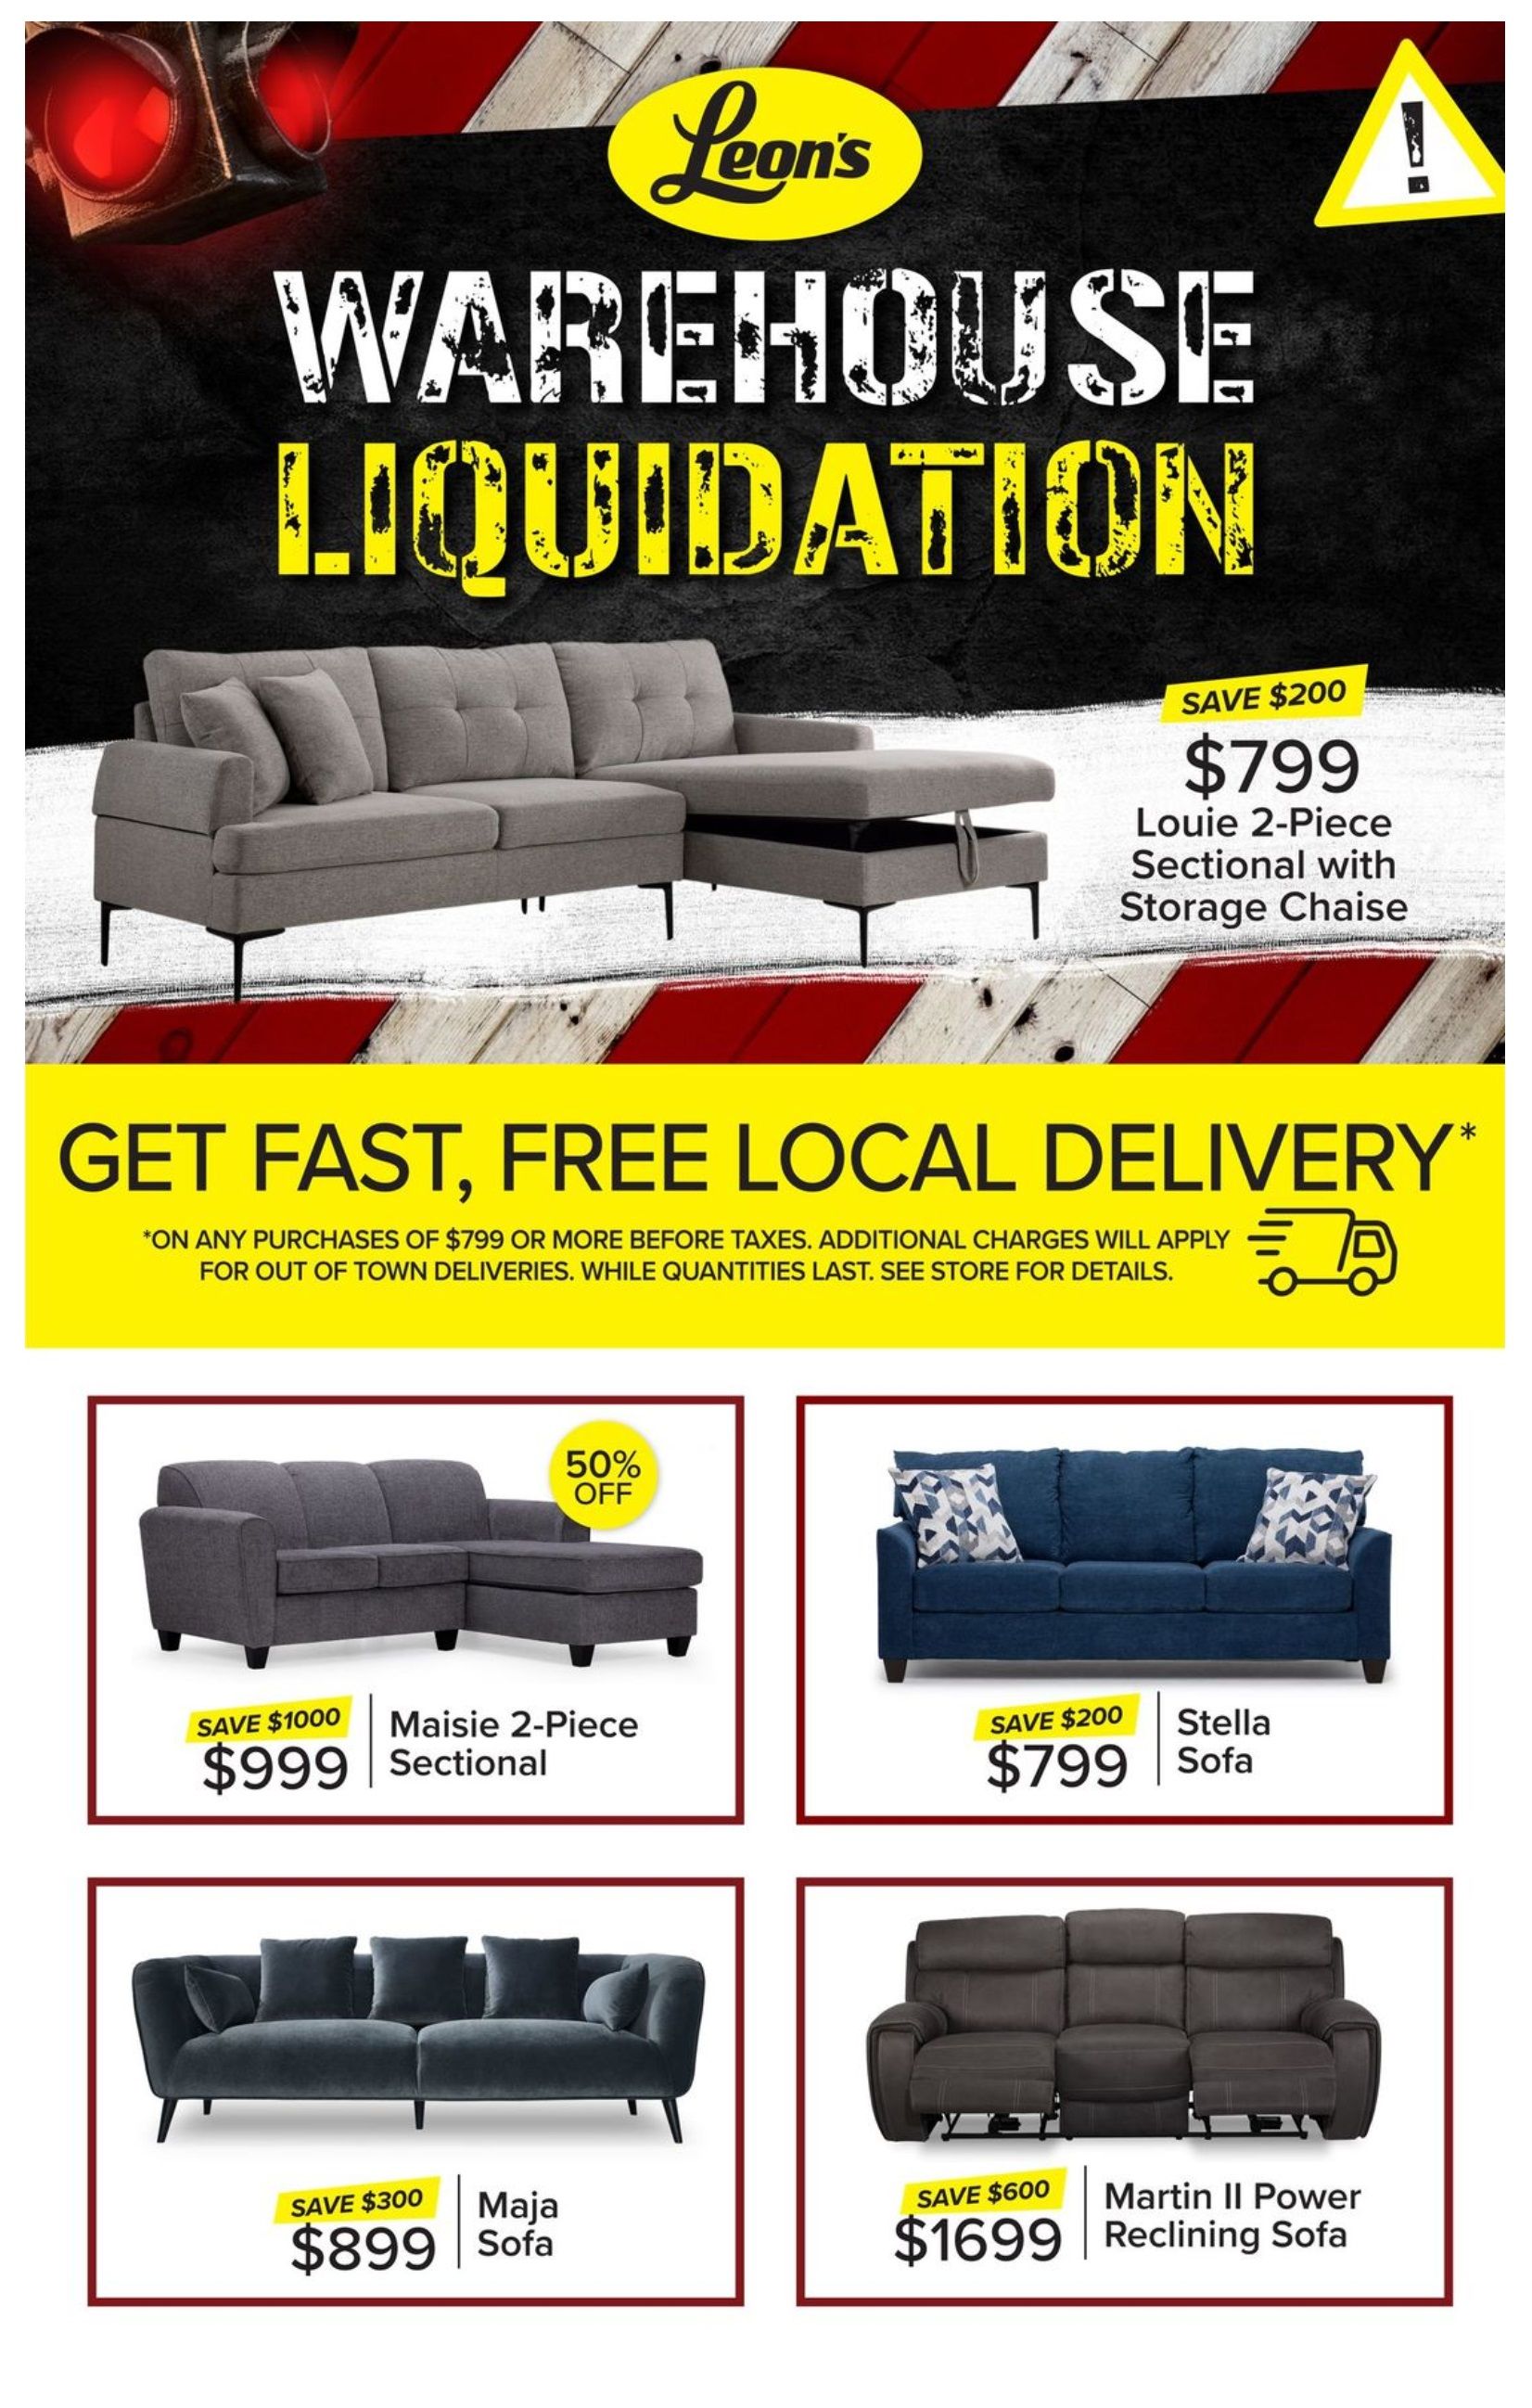 Leon's - Warehouse Liquidation